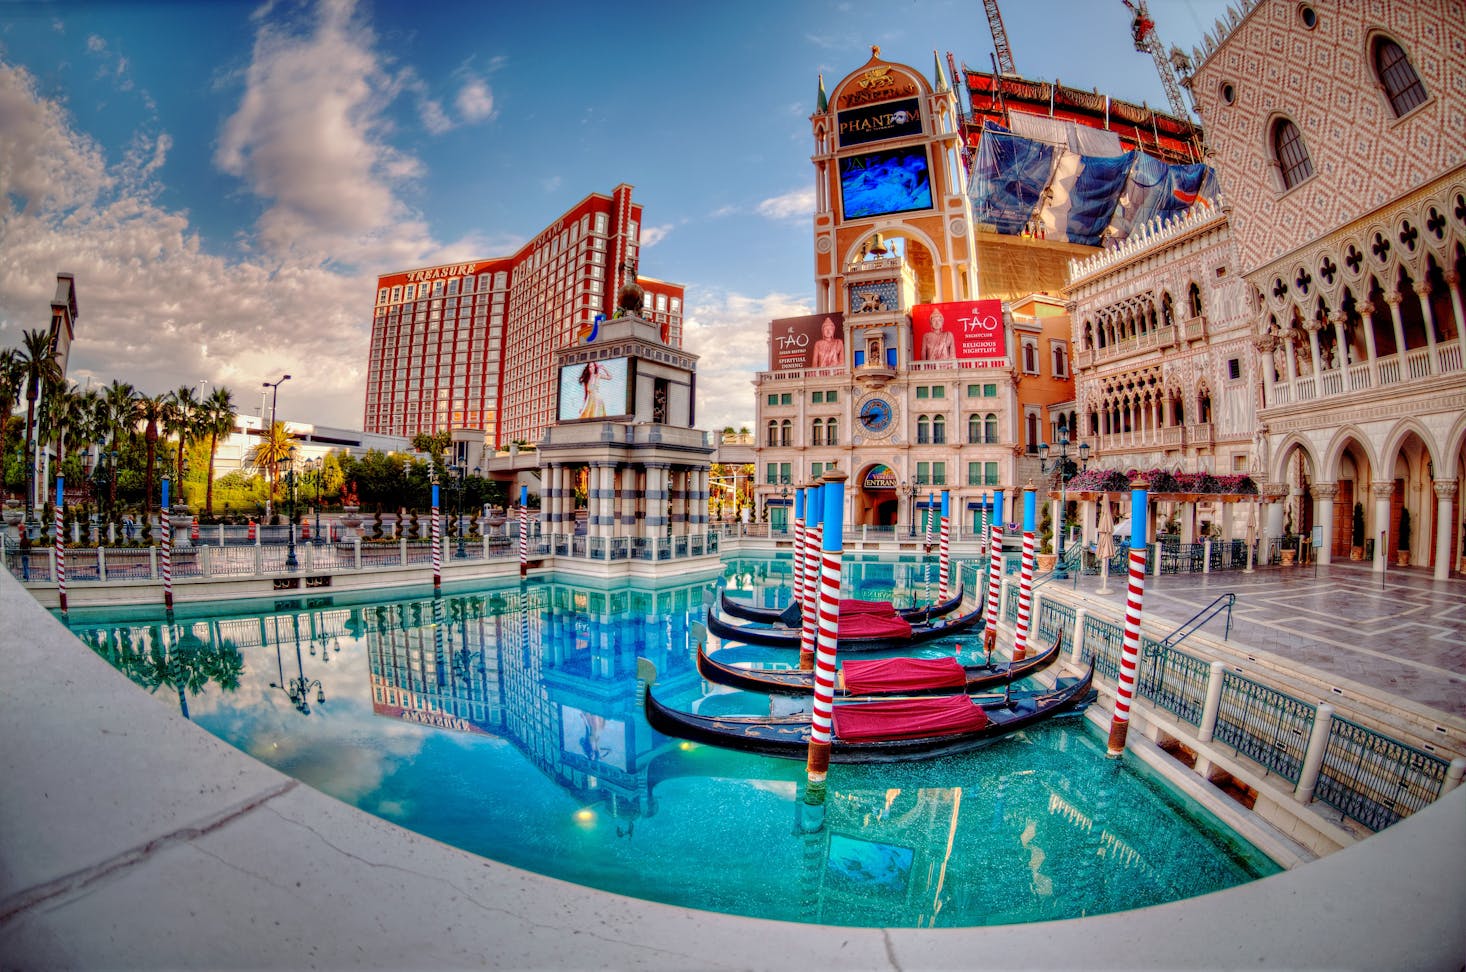 Pool at the Venetian Hotel in las Vegas